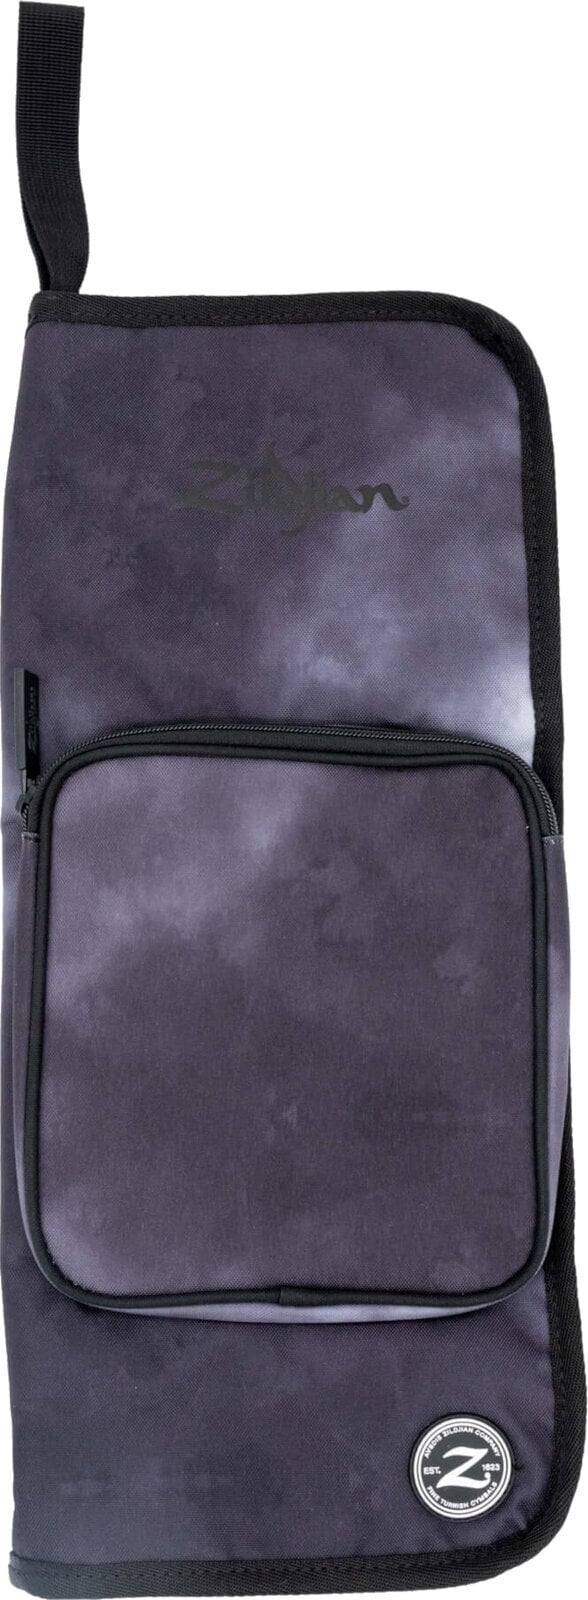 Saco para baquetas Zildjian Student Stick Bag Black Rain Cloud Saco para baquetas